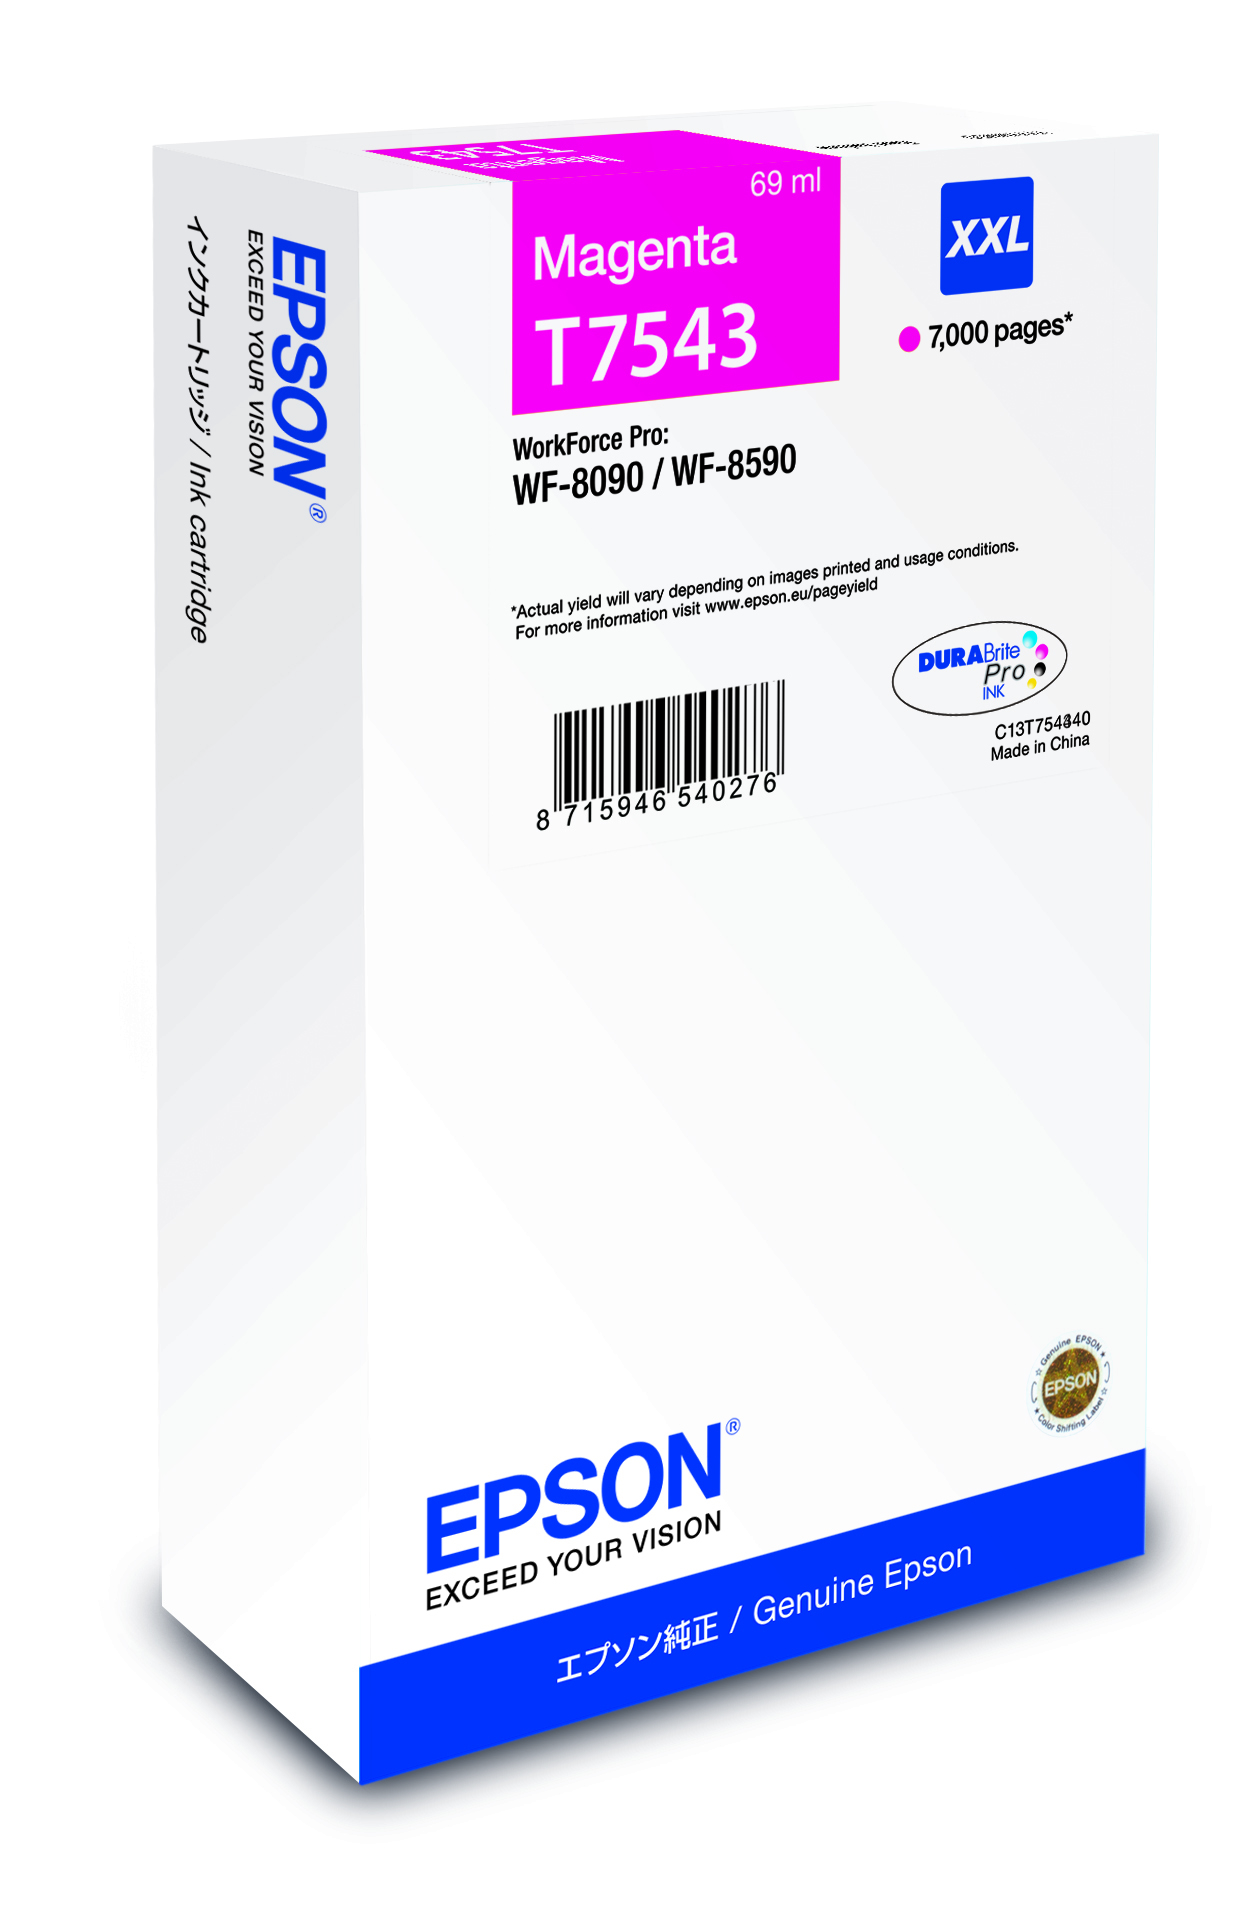 Epson WF-8090 / WF-8590 Ink Cartridge XXL Magenta single pack / magenta